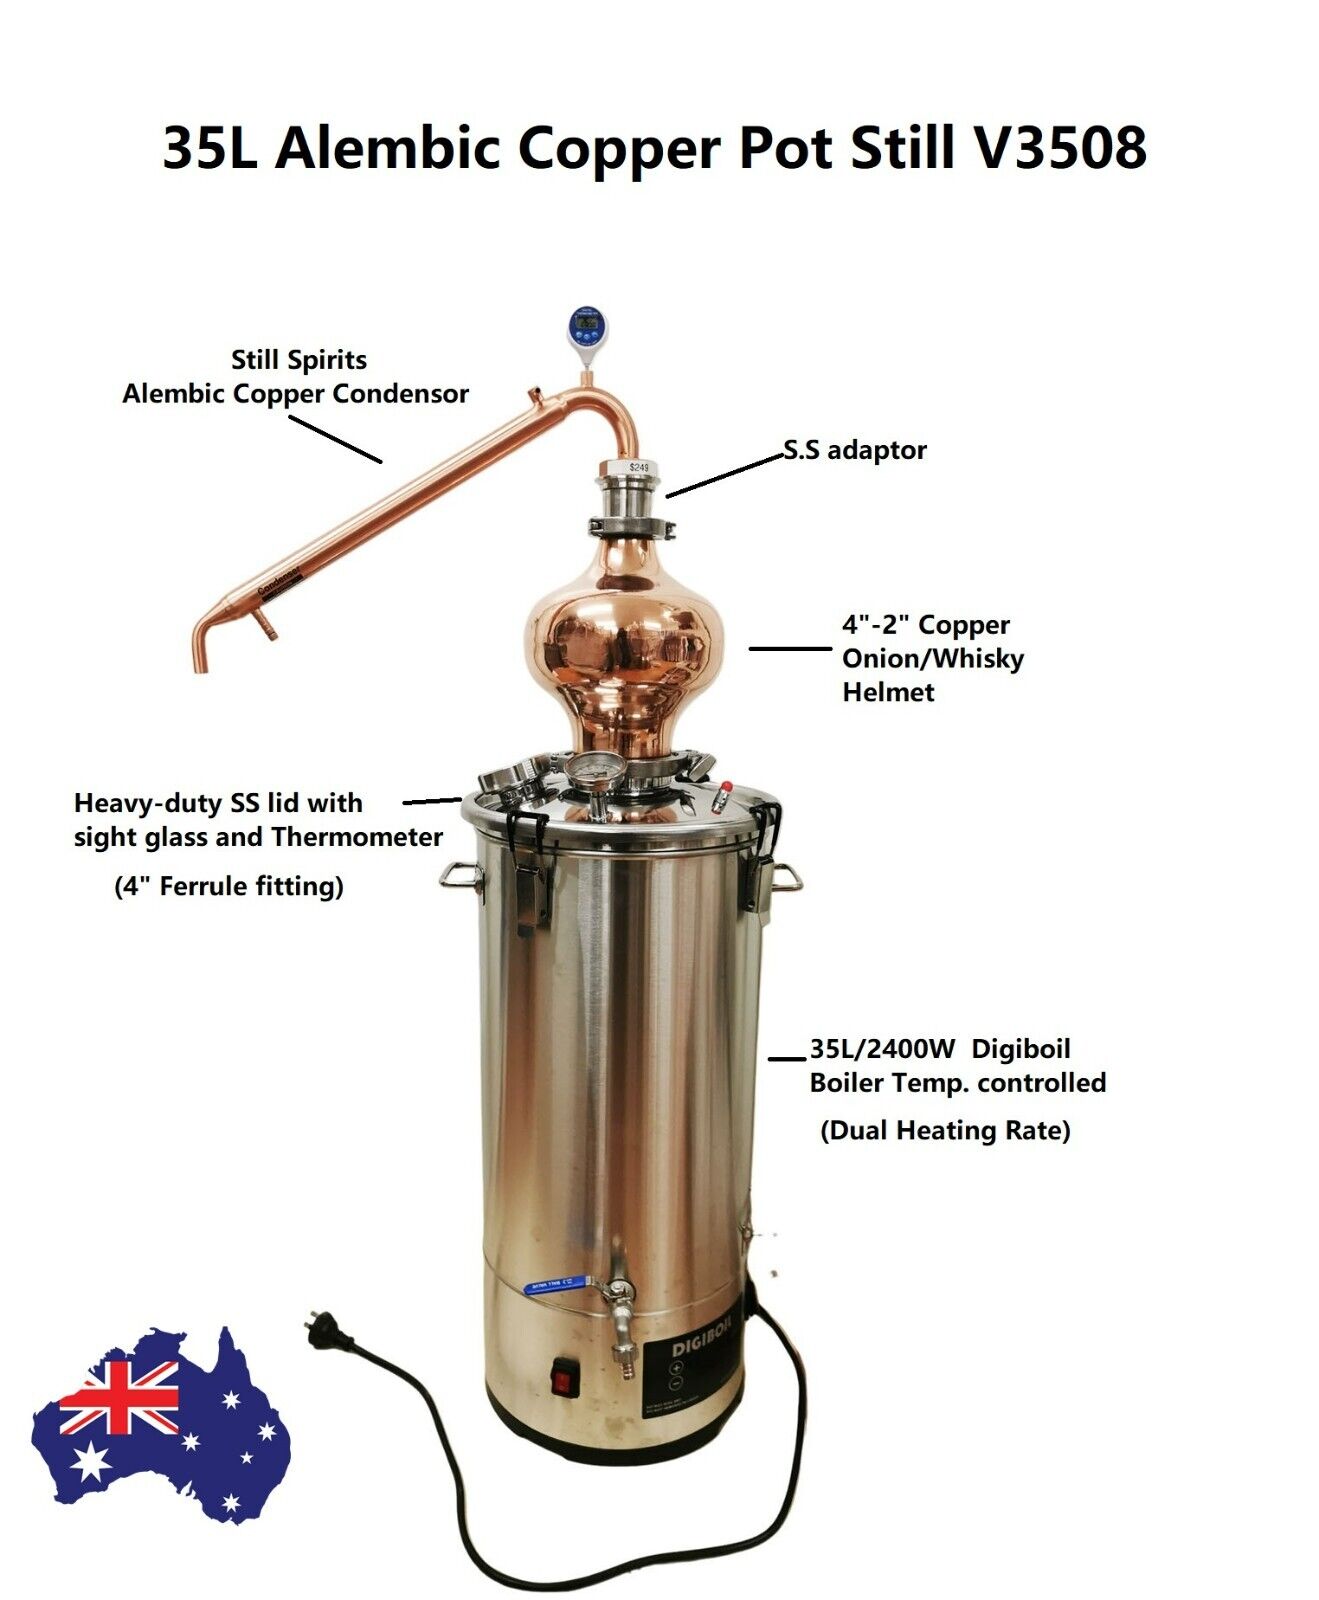 StillMate 35L Copper Pot still Kit V3508 Make Whisky Bourbon with Copper Onion